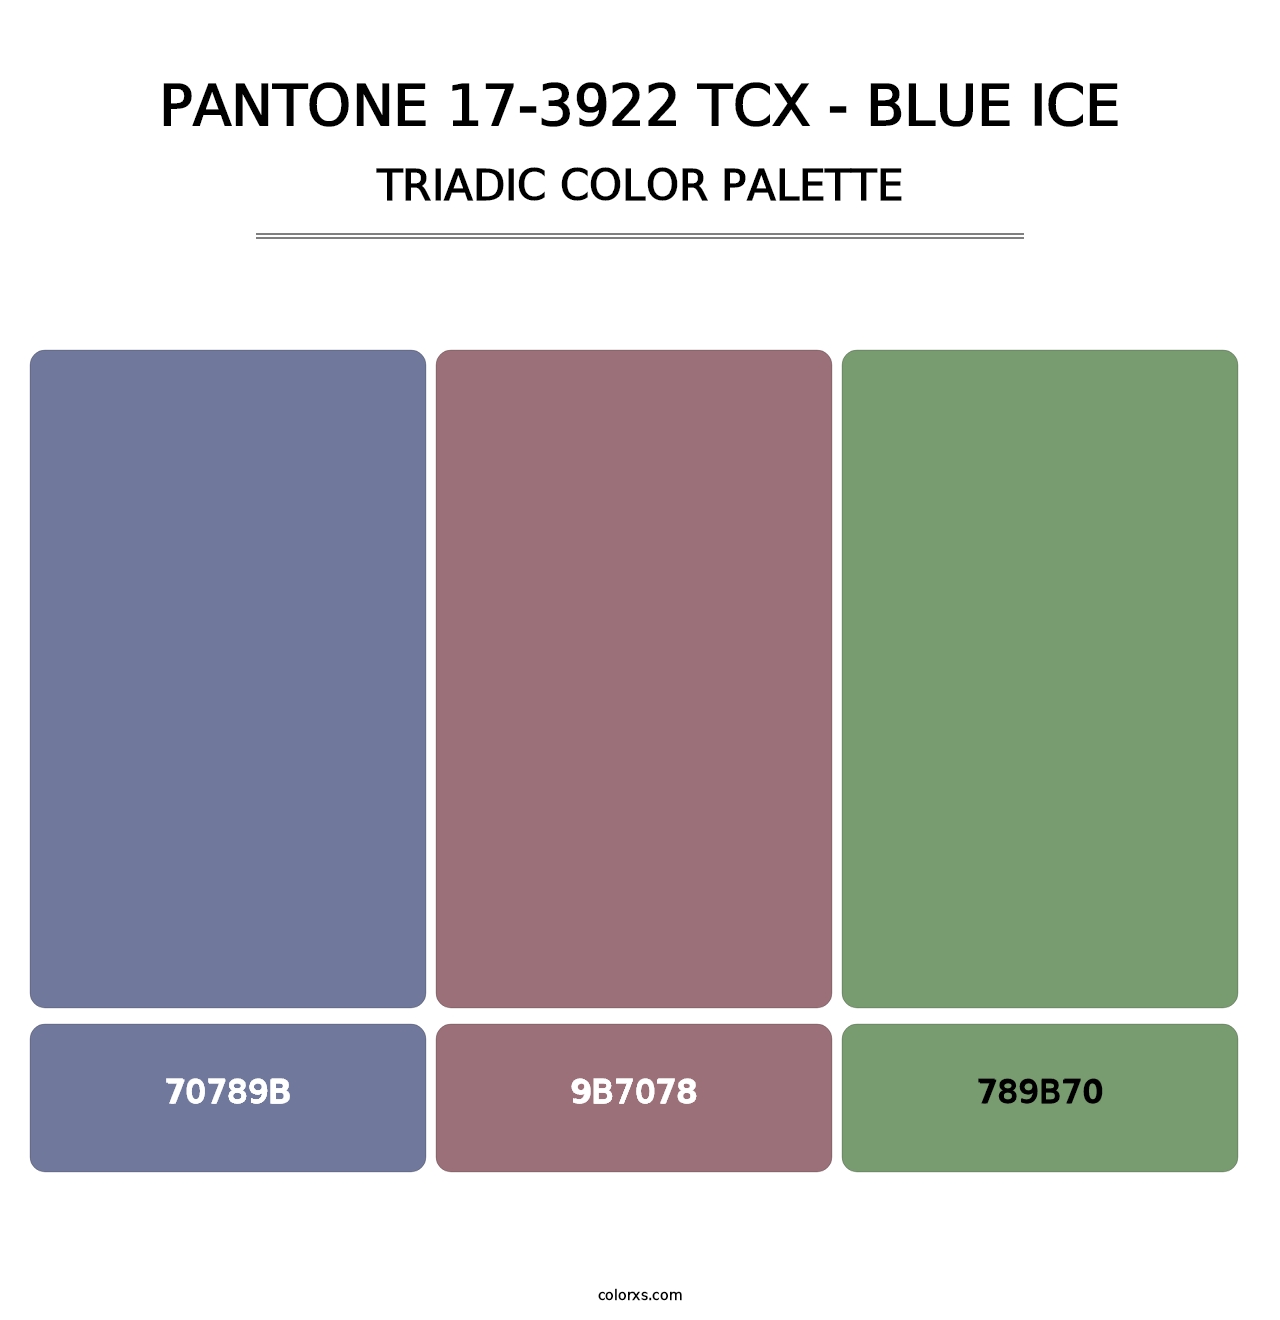 PANTONE 17-3922 TCX - Blue Ice - Triadic Color Palette